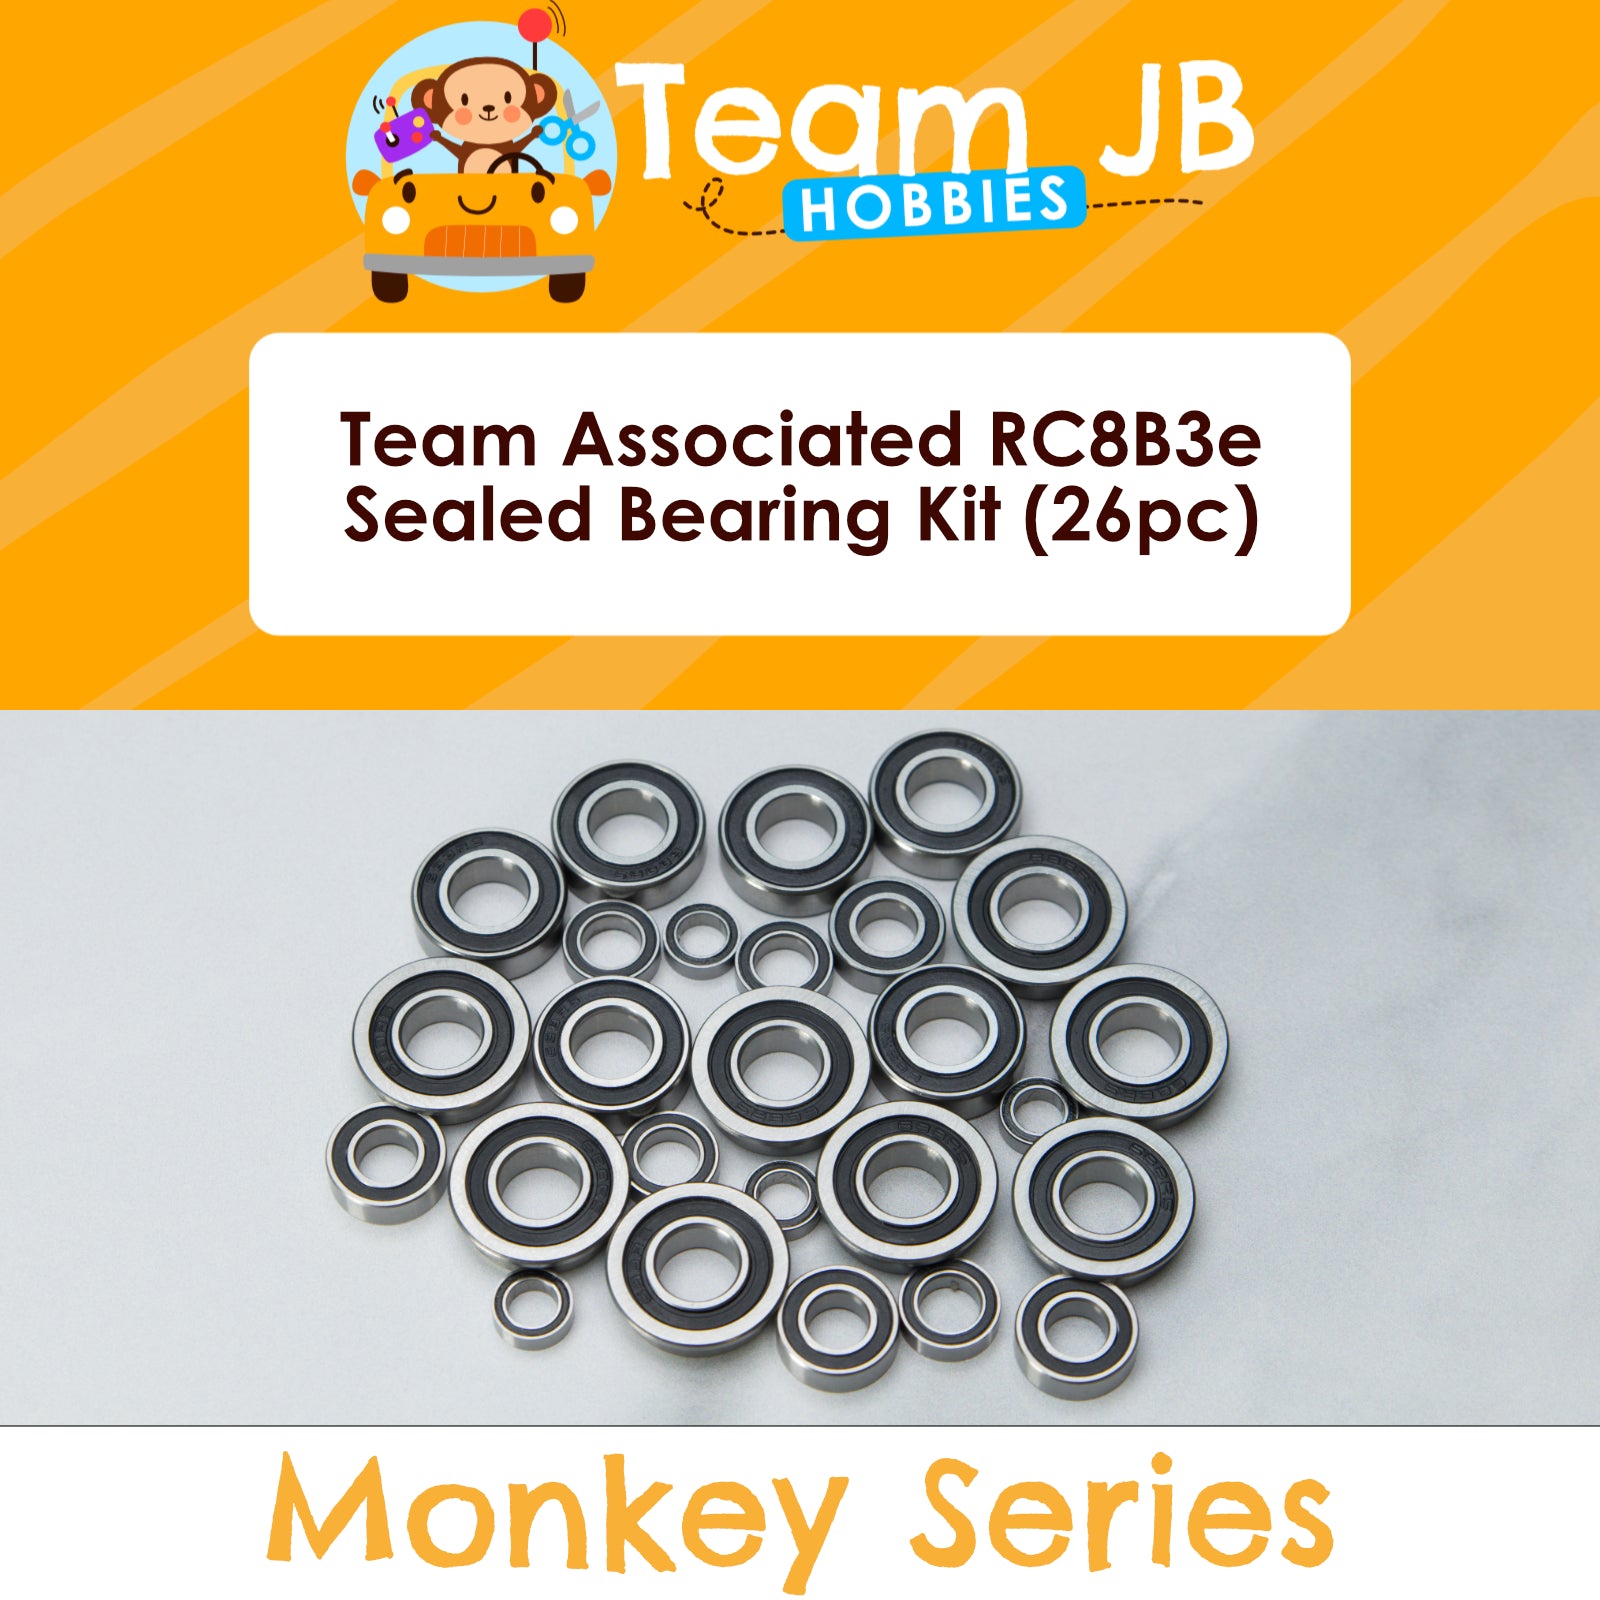 Team Associated RC8B3e - Sealed Bearing Kit